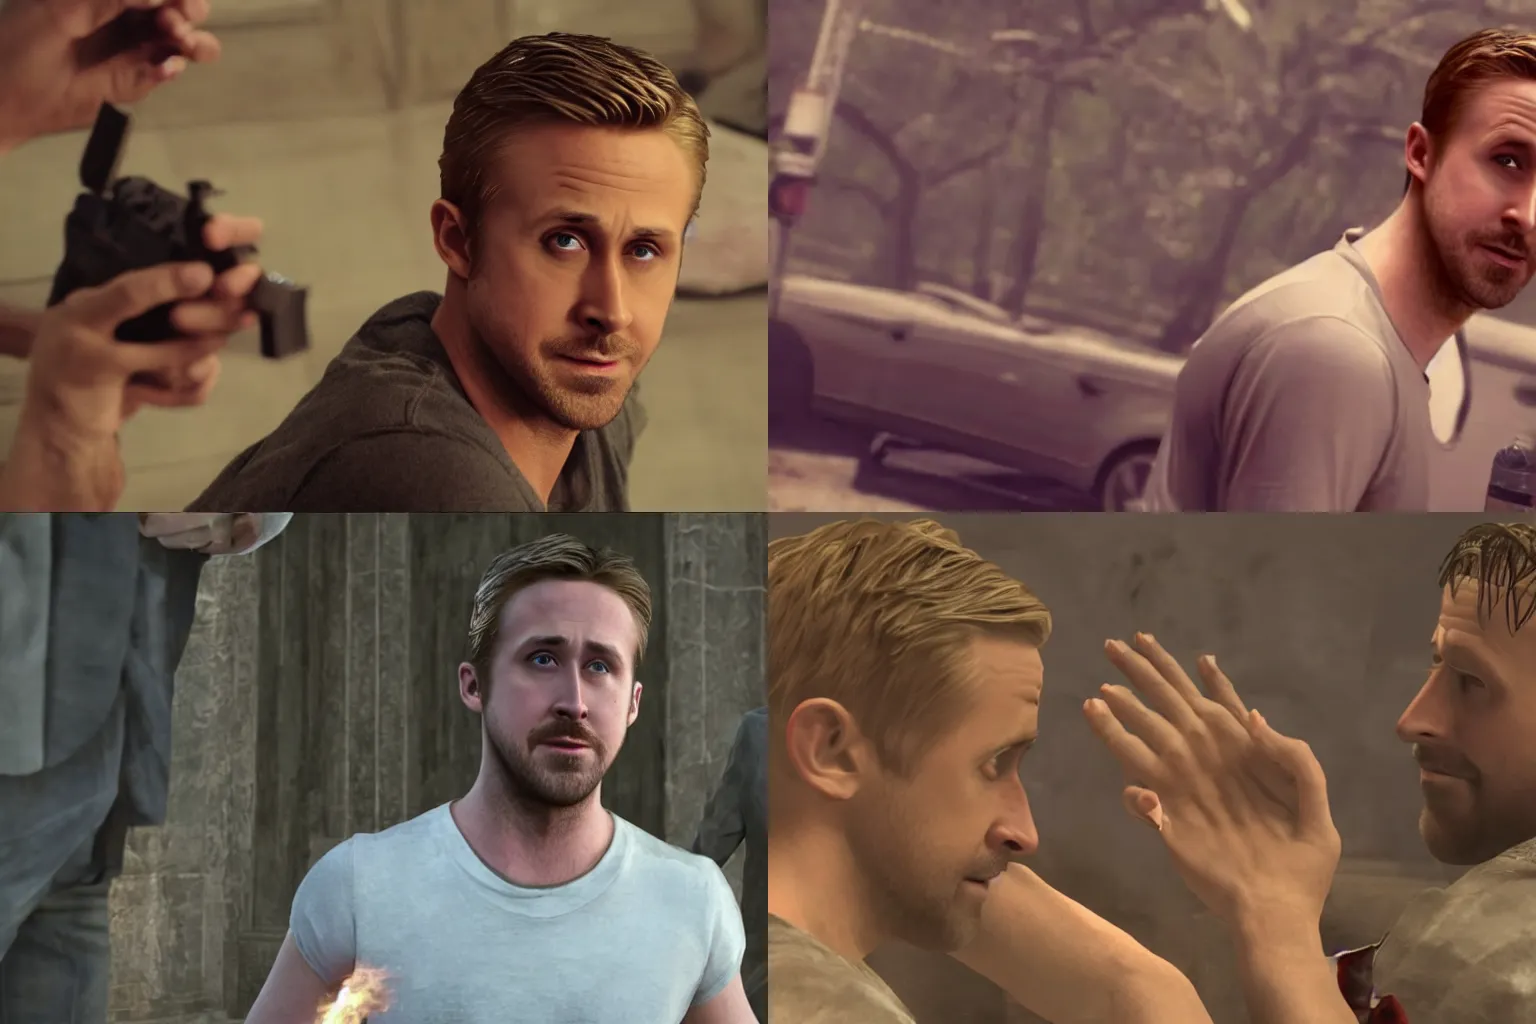 Prompt: ryan gosling death scene, in-game screenshot